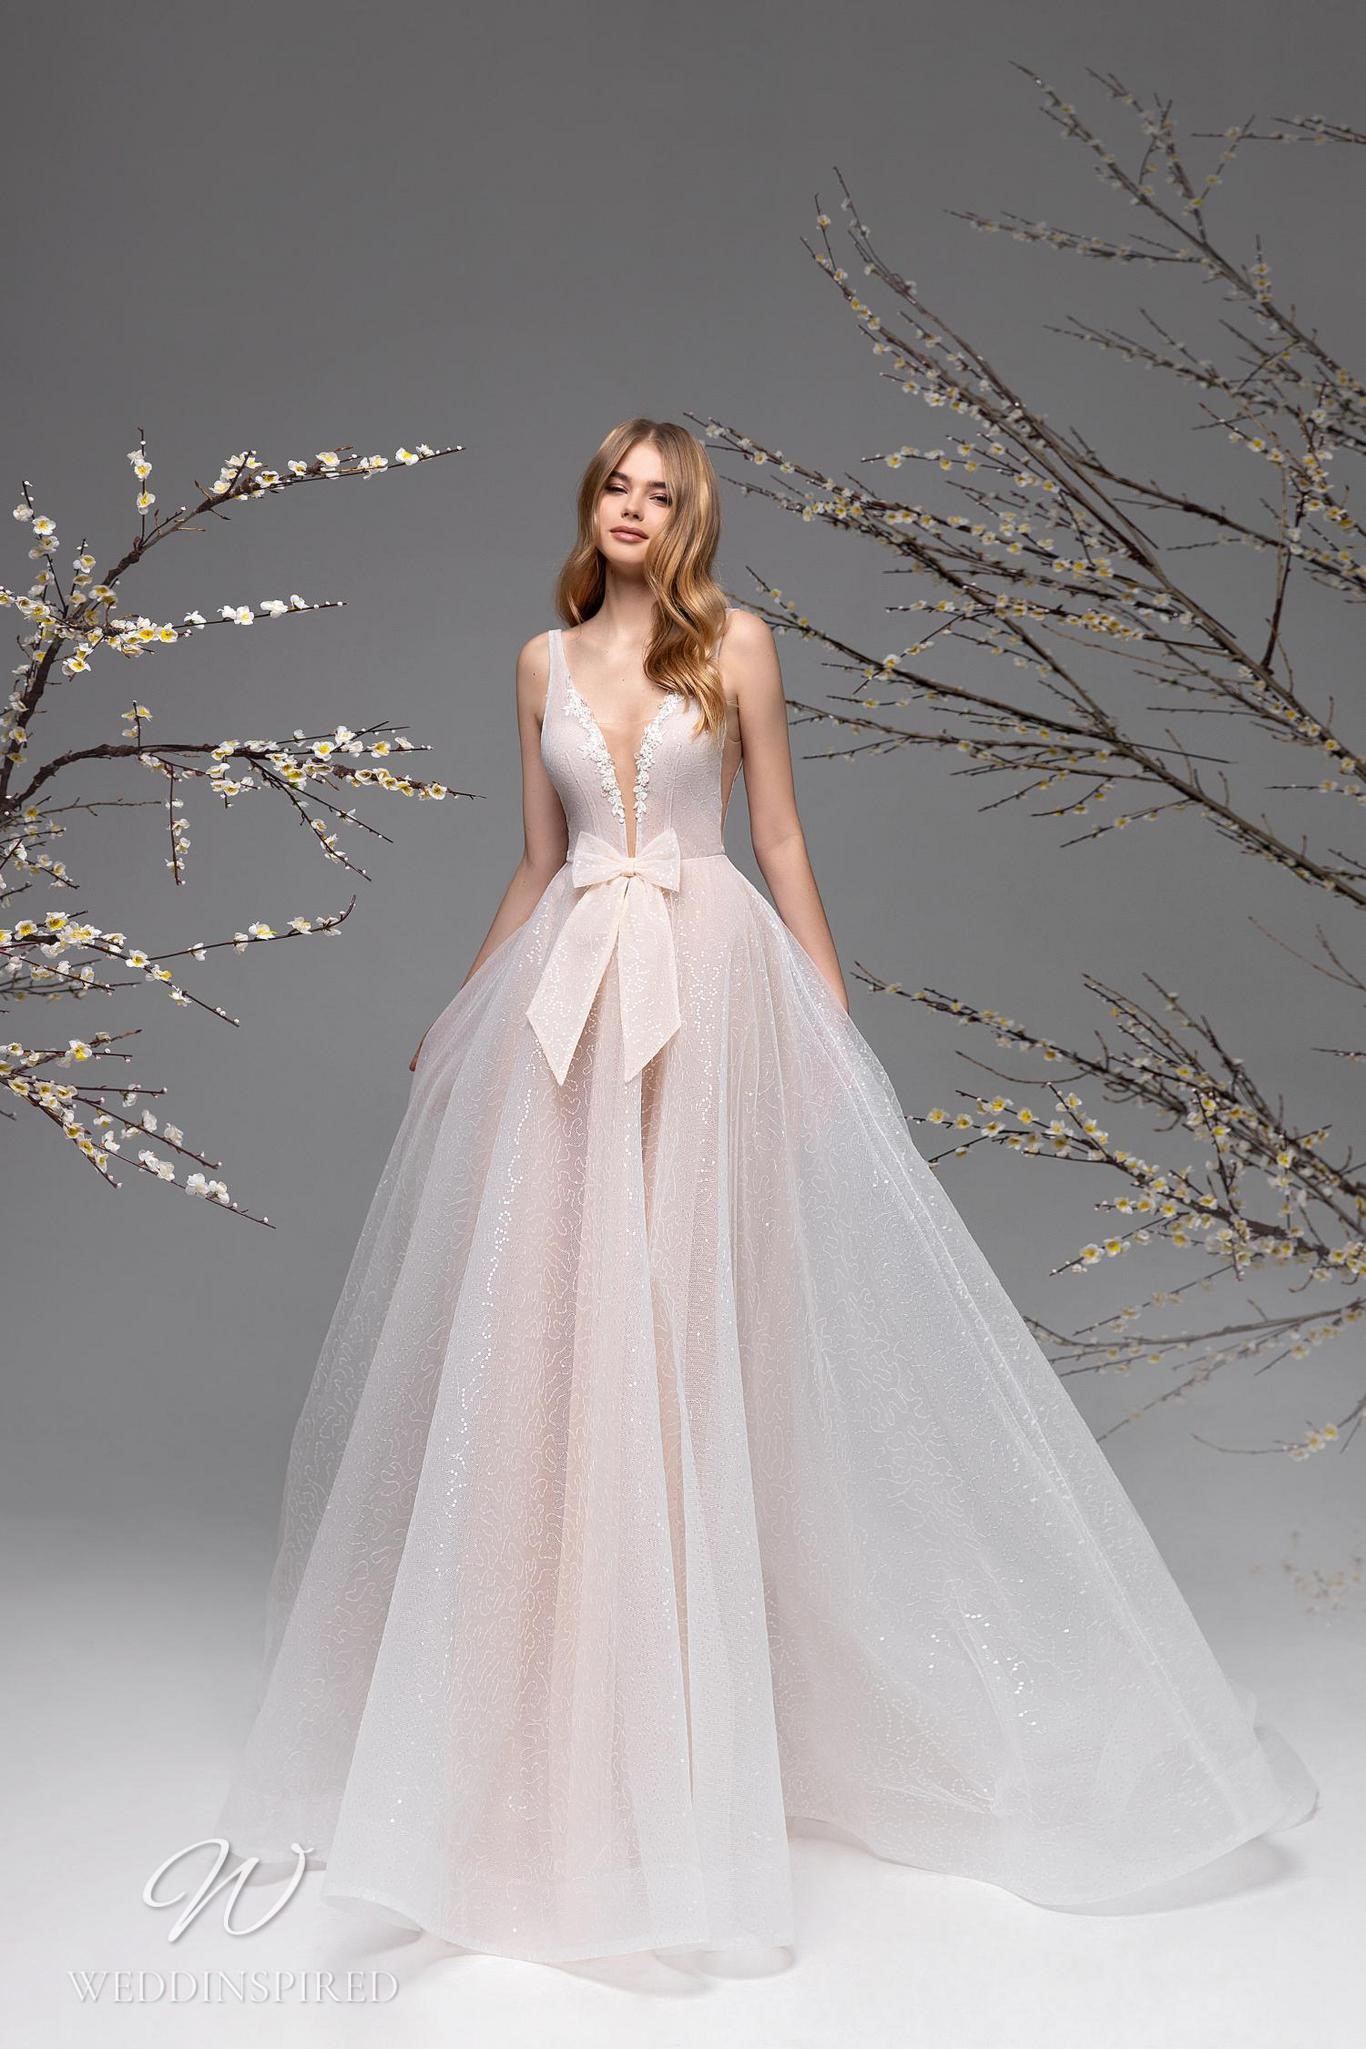 Ricca Sposa blush tulle A-line wedding dress